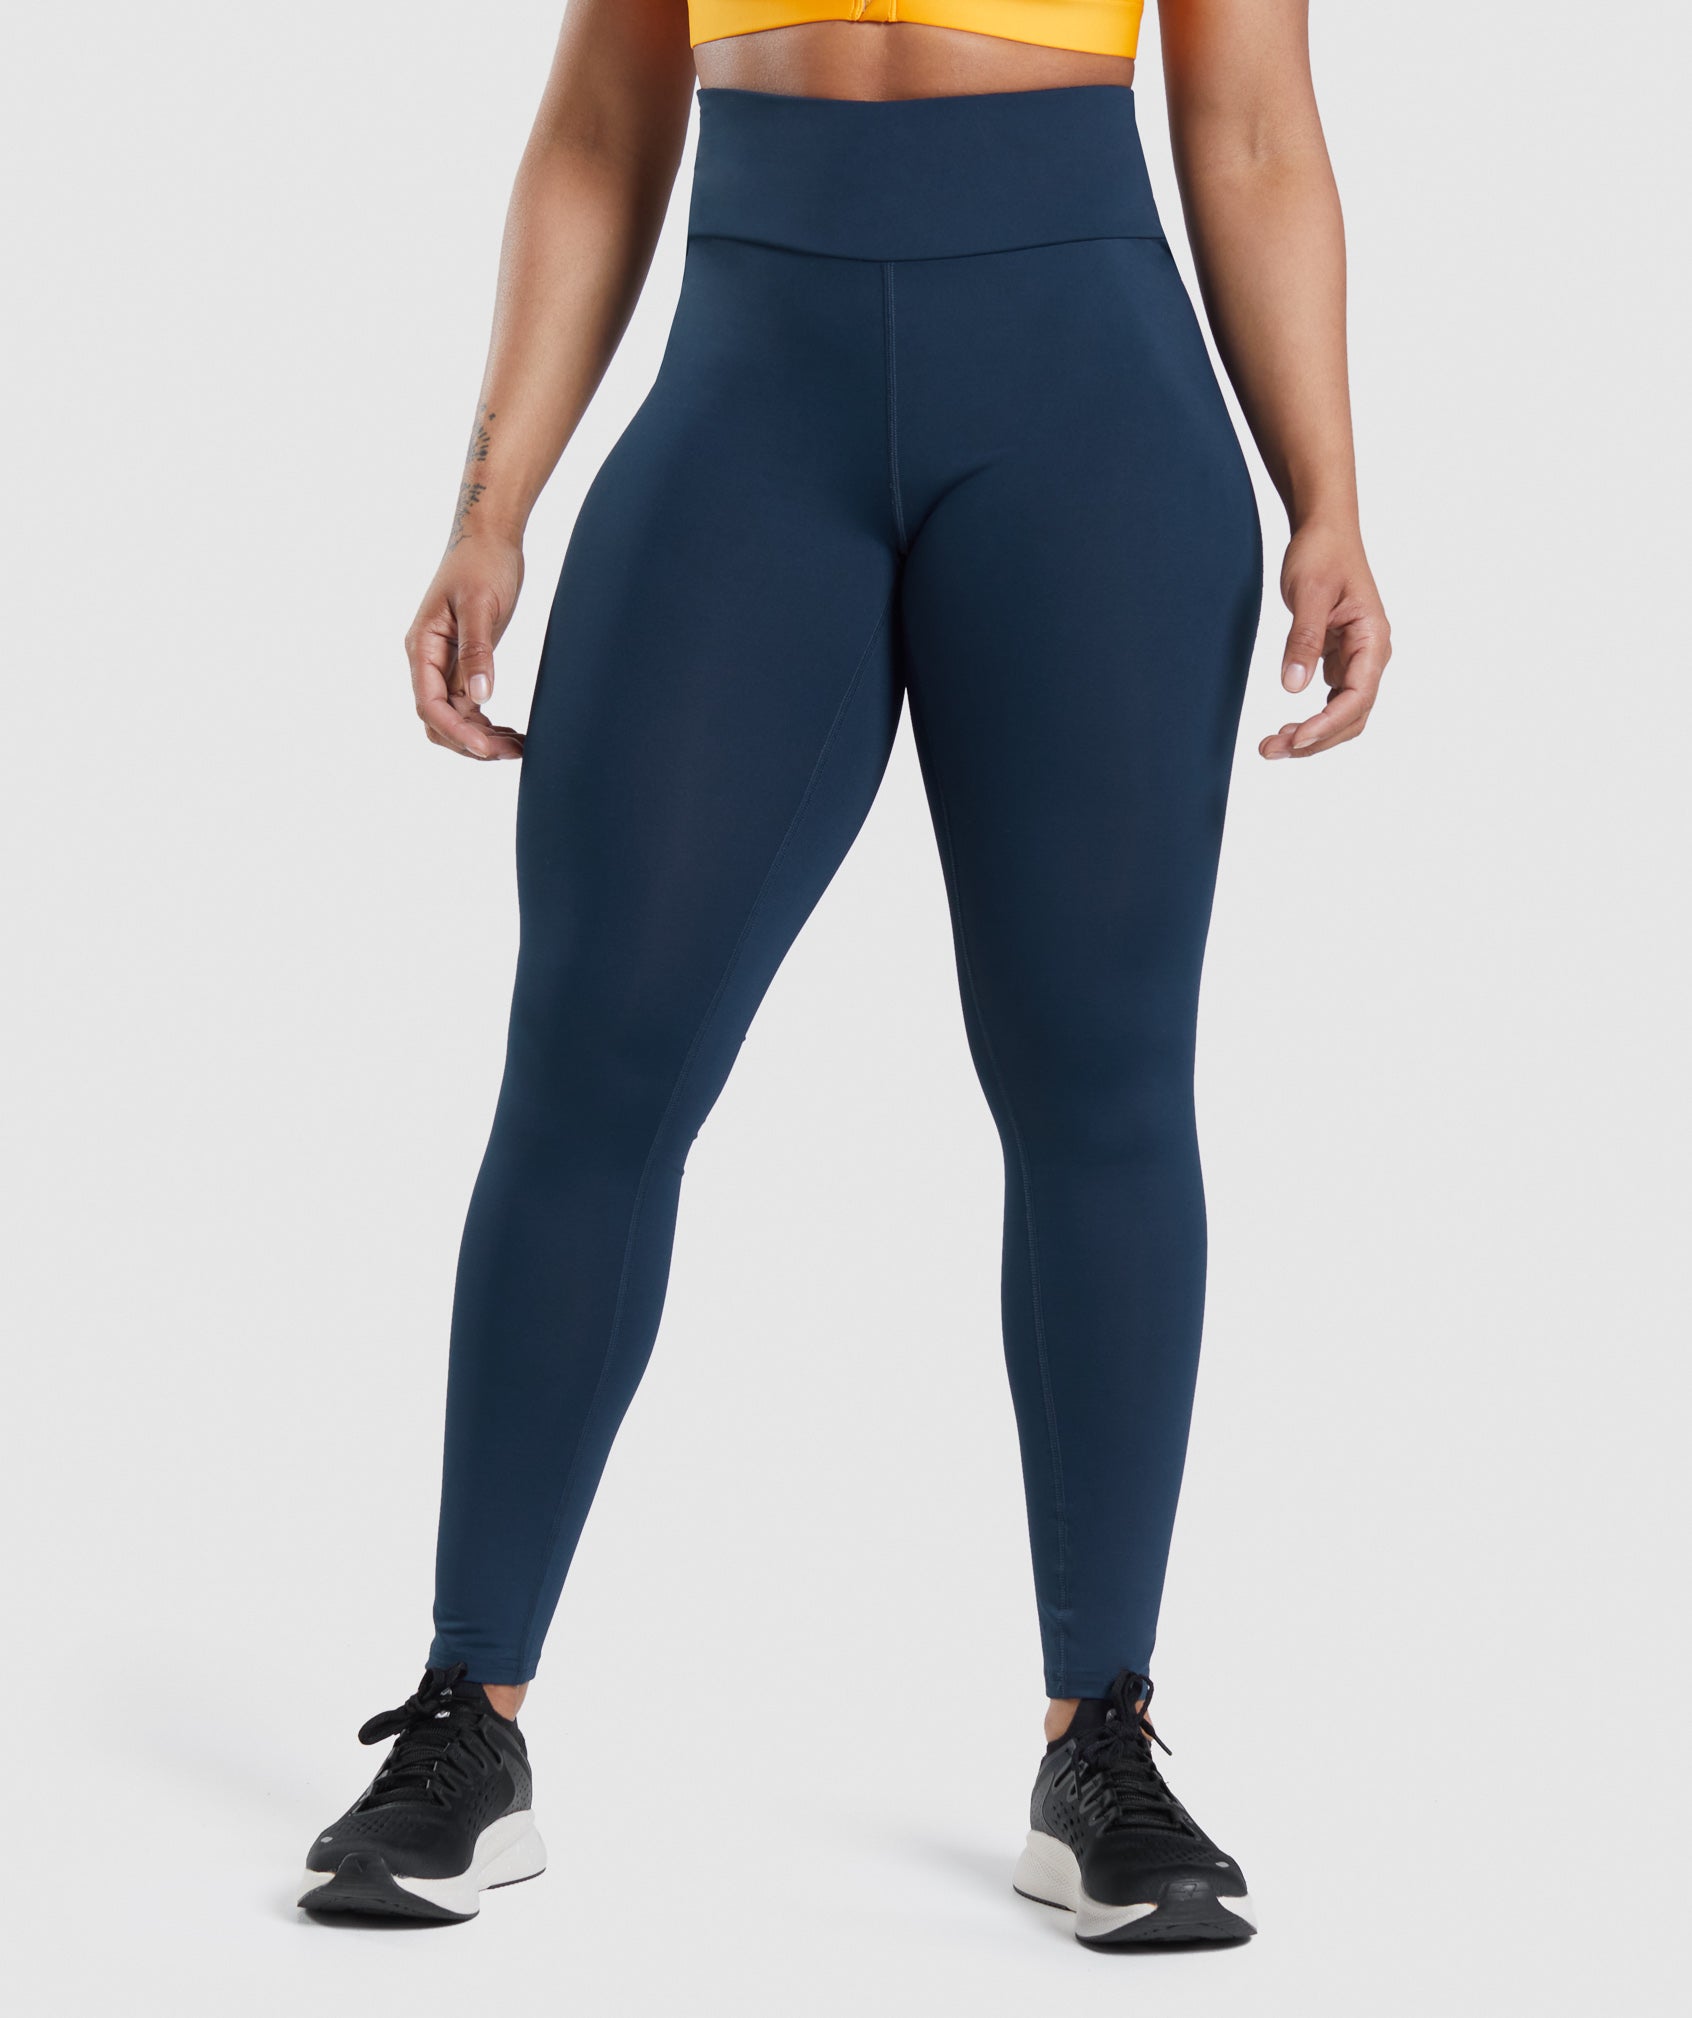 Women's training leggings Gymshark Speed niagara teal 